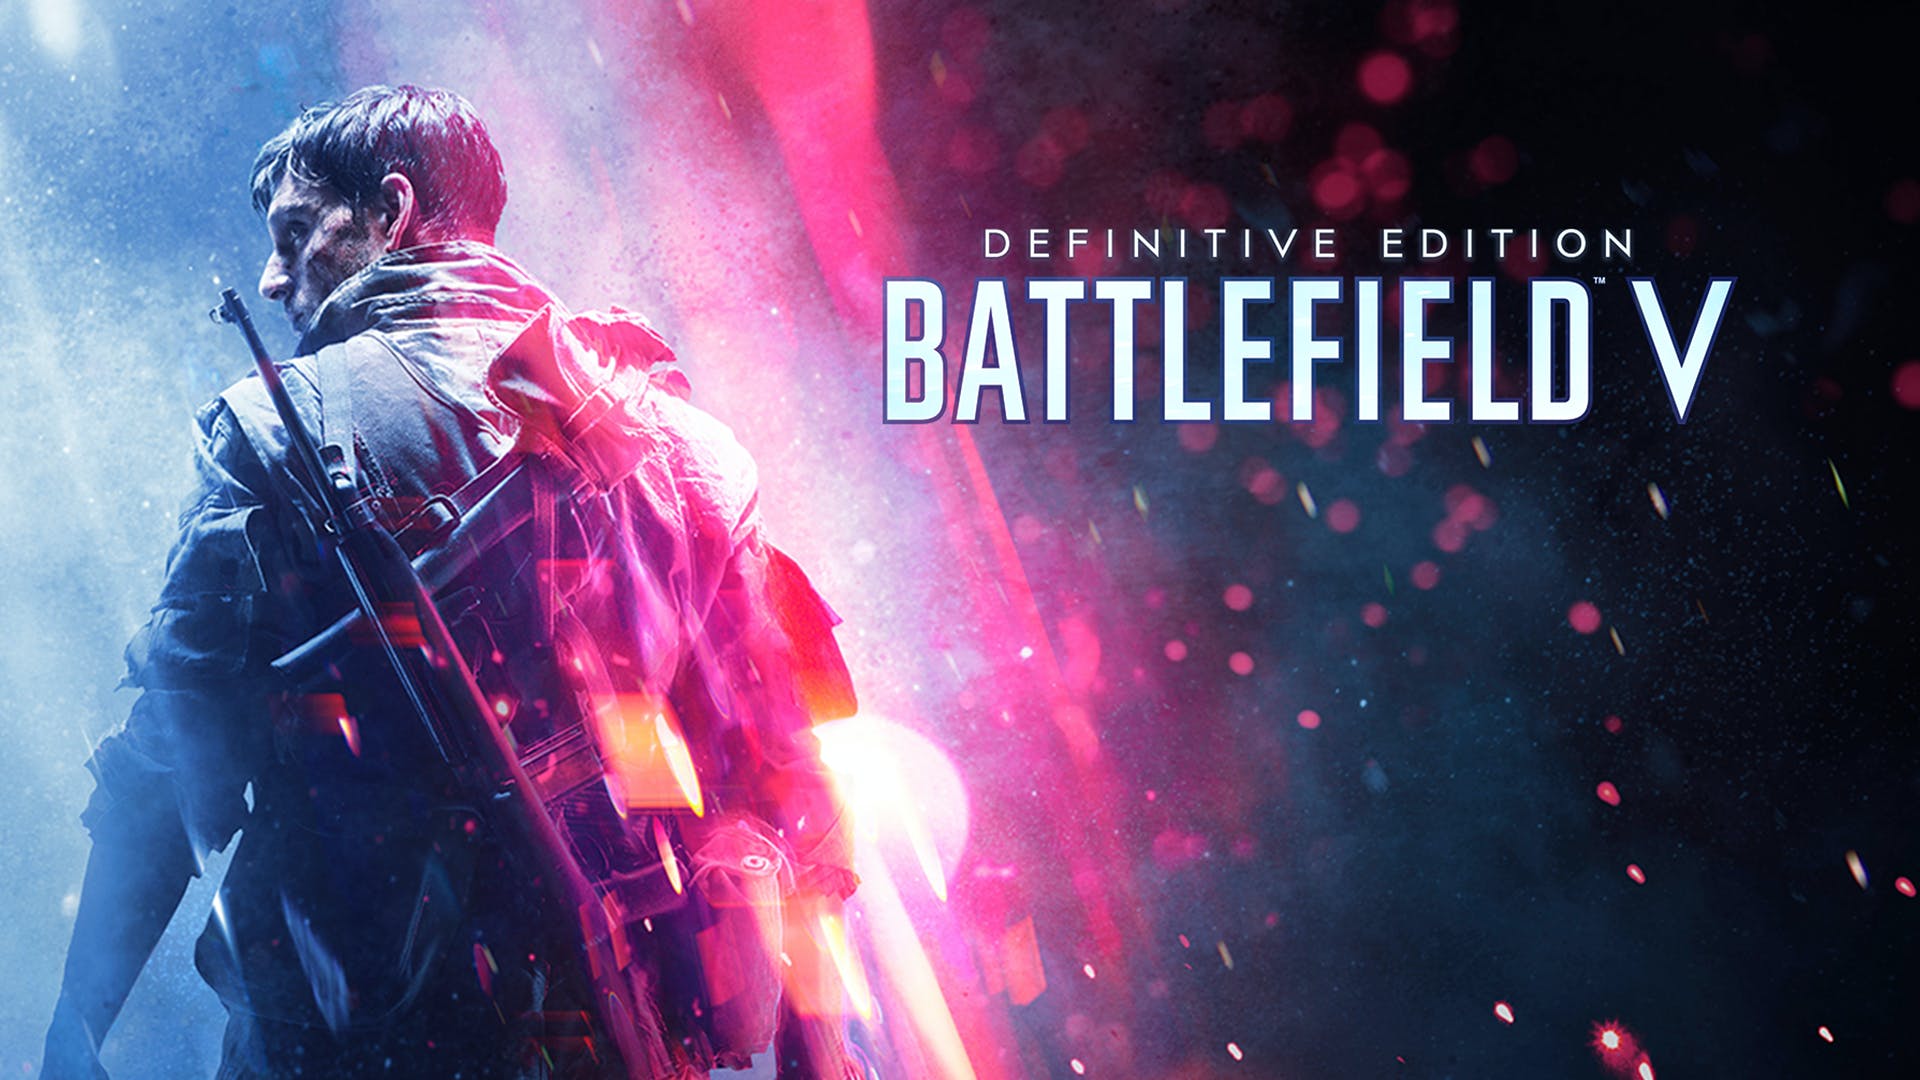 V definition. Battlefield ™ v Definitive Edition. Бателфилд ориджин. EA Battlefield v. Battlefield 5 Definitive Edition ps4.